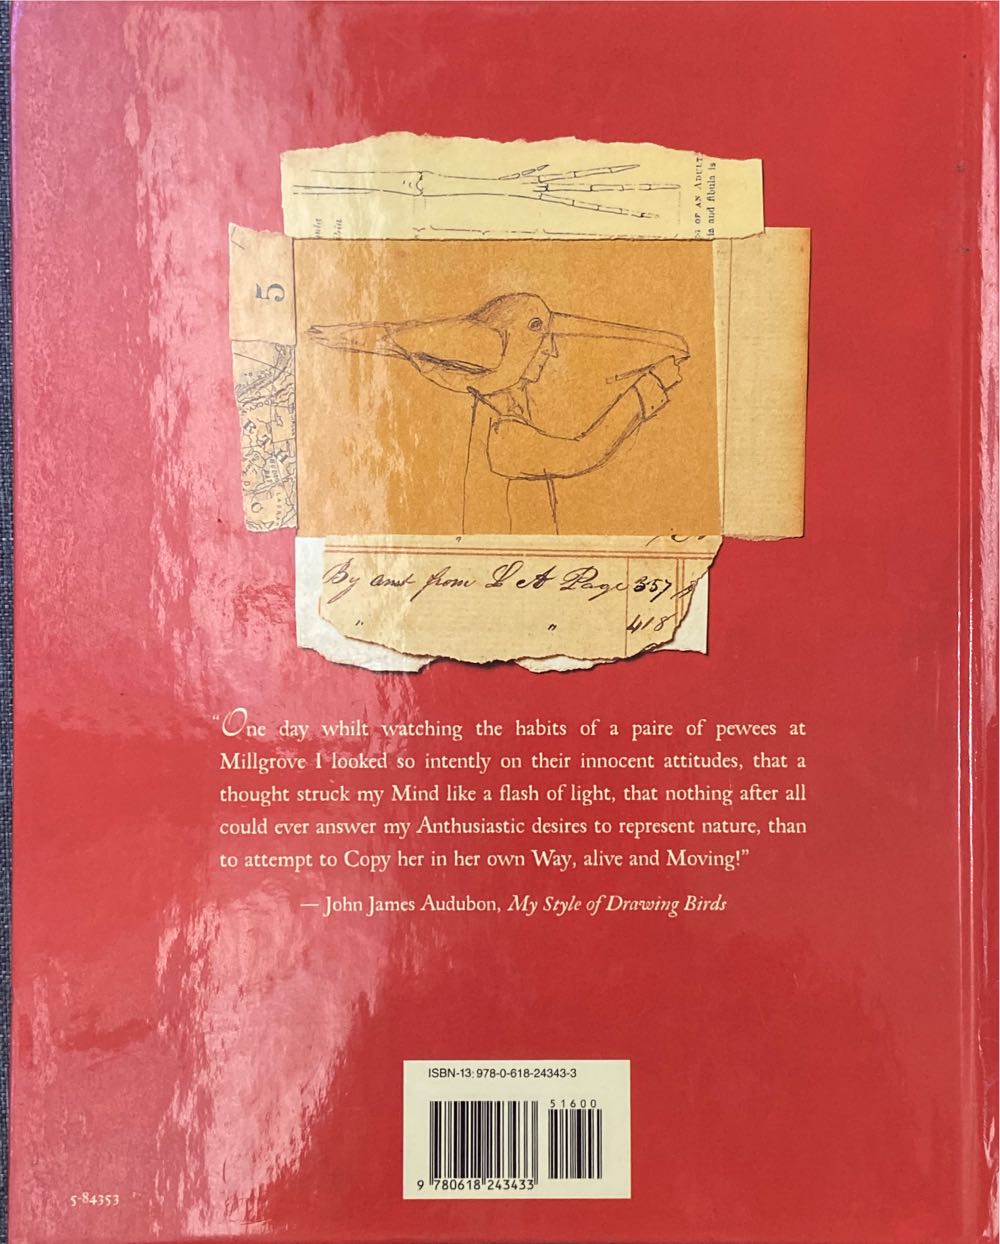 The Boy Who Drew Birds: A Story of John James Audubon - Jacqueline Davies (Houghton Mifflin Company - Hardcover) book collectible [Barcode 9780618243433] - Main Image 2